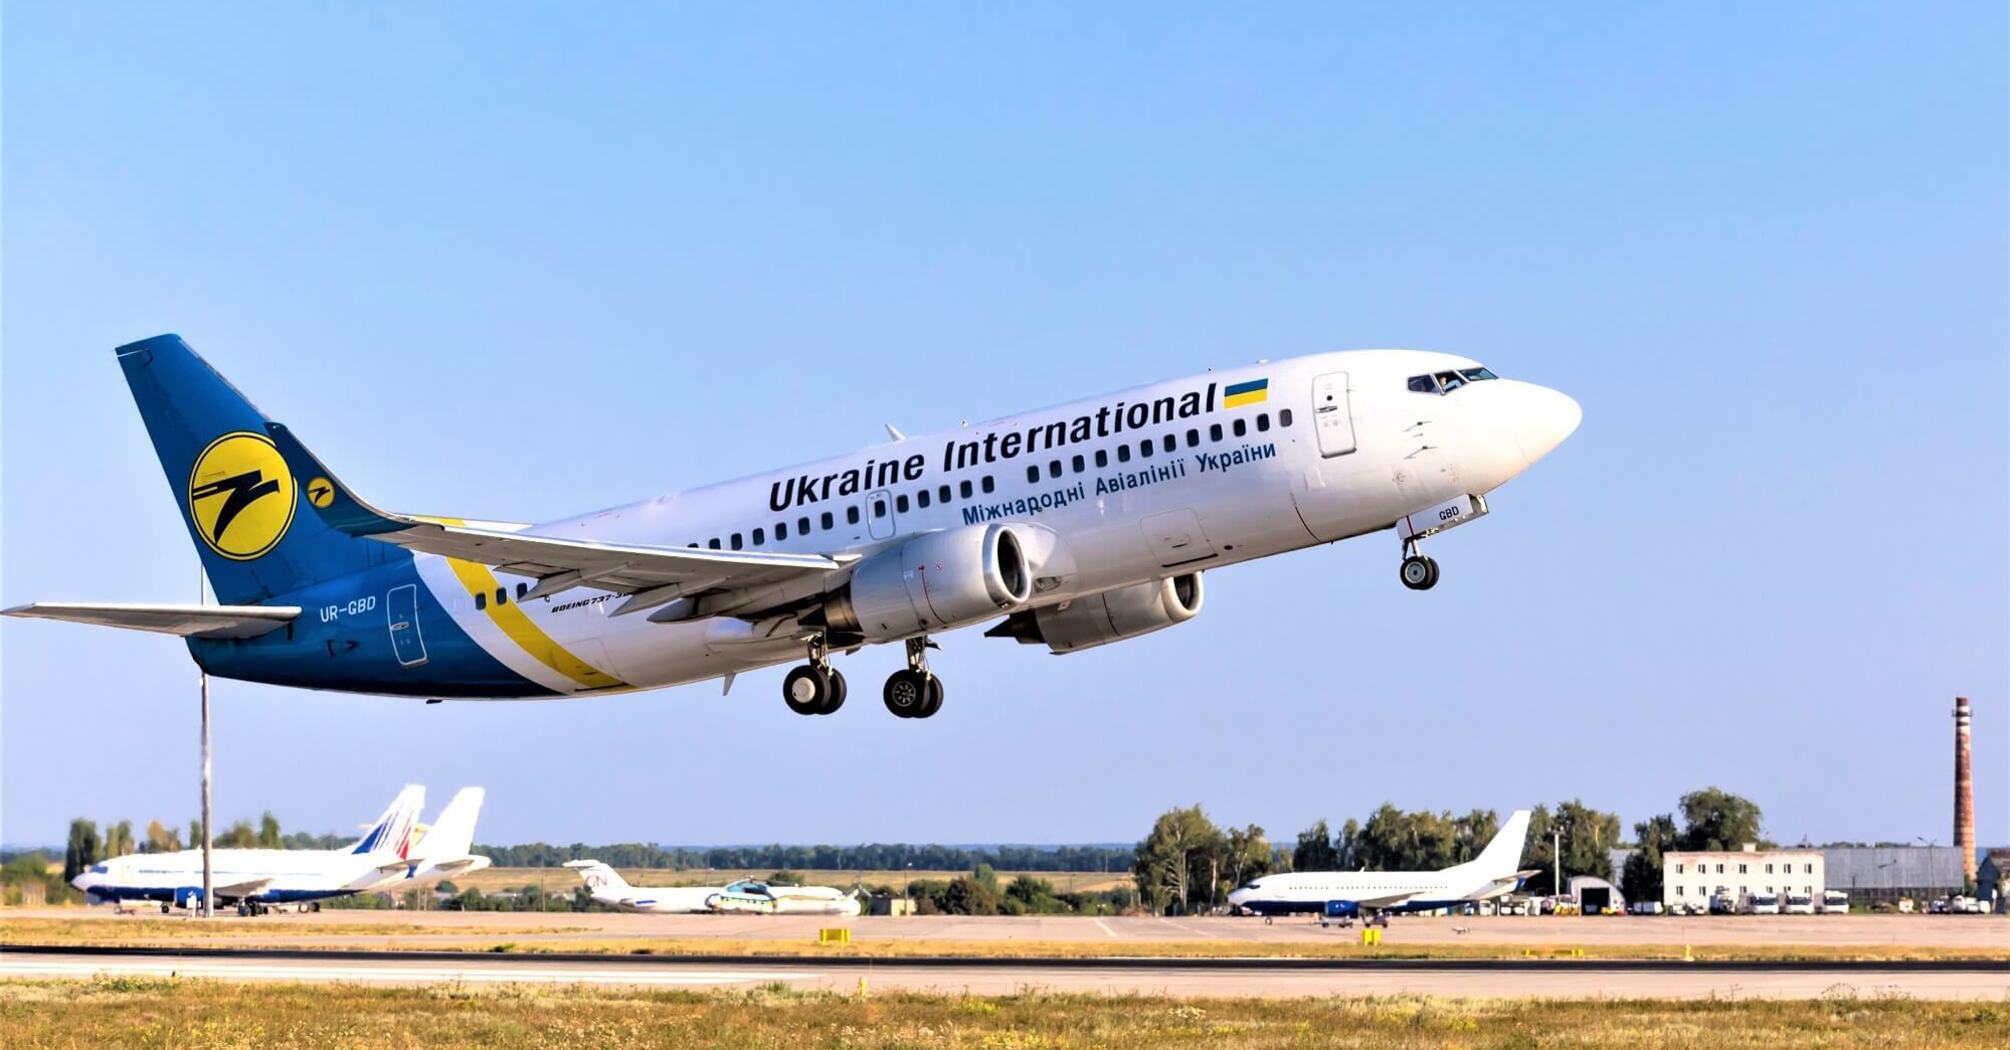 Ukraine International Airlines compensation for delayed or cancelled flights